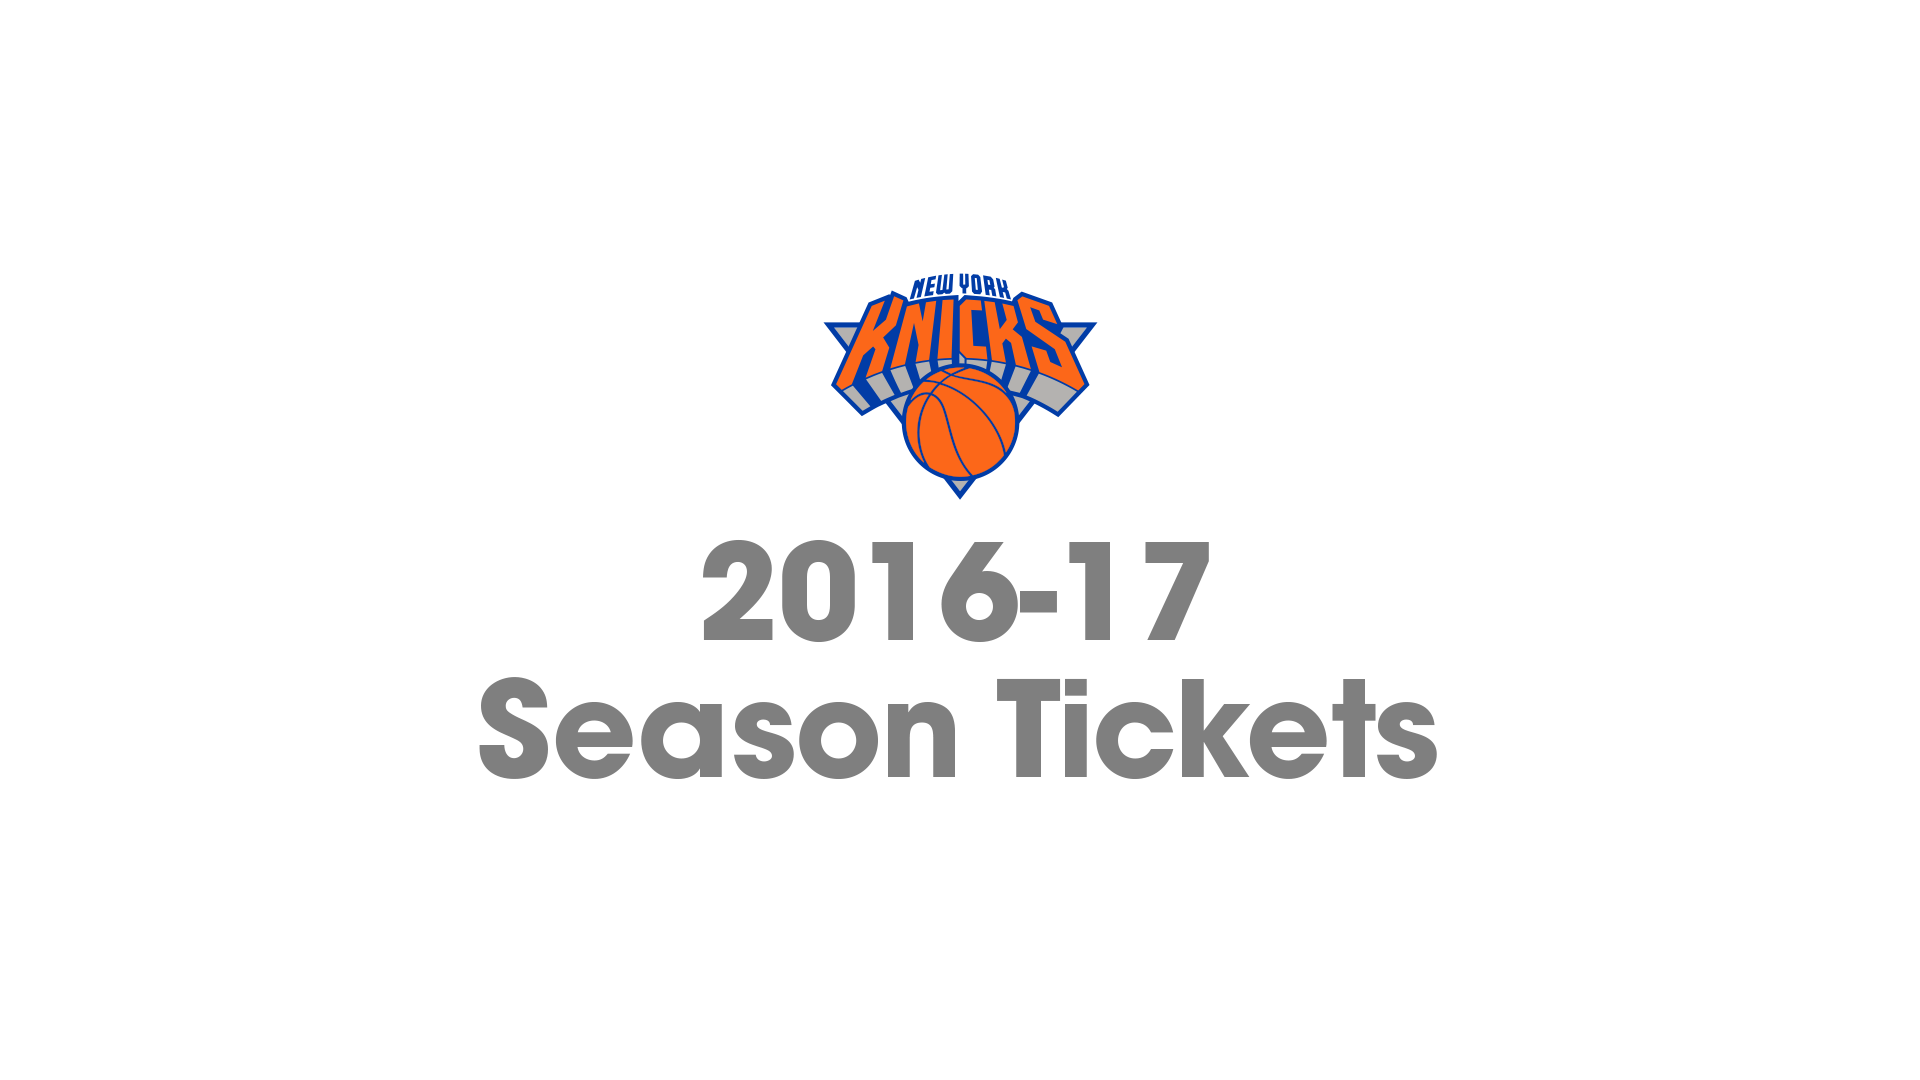 New York Knicks 2016-17 Season Tickets